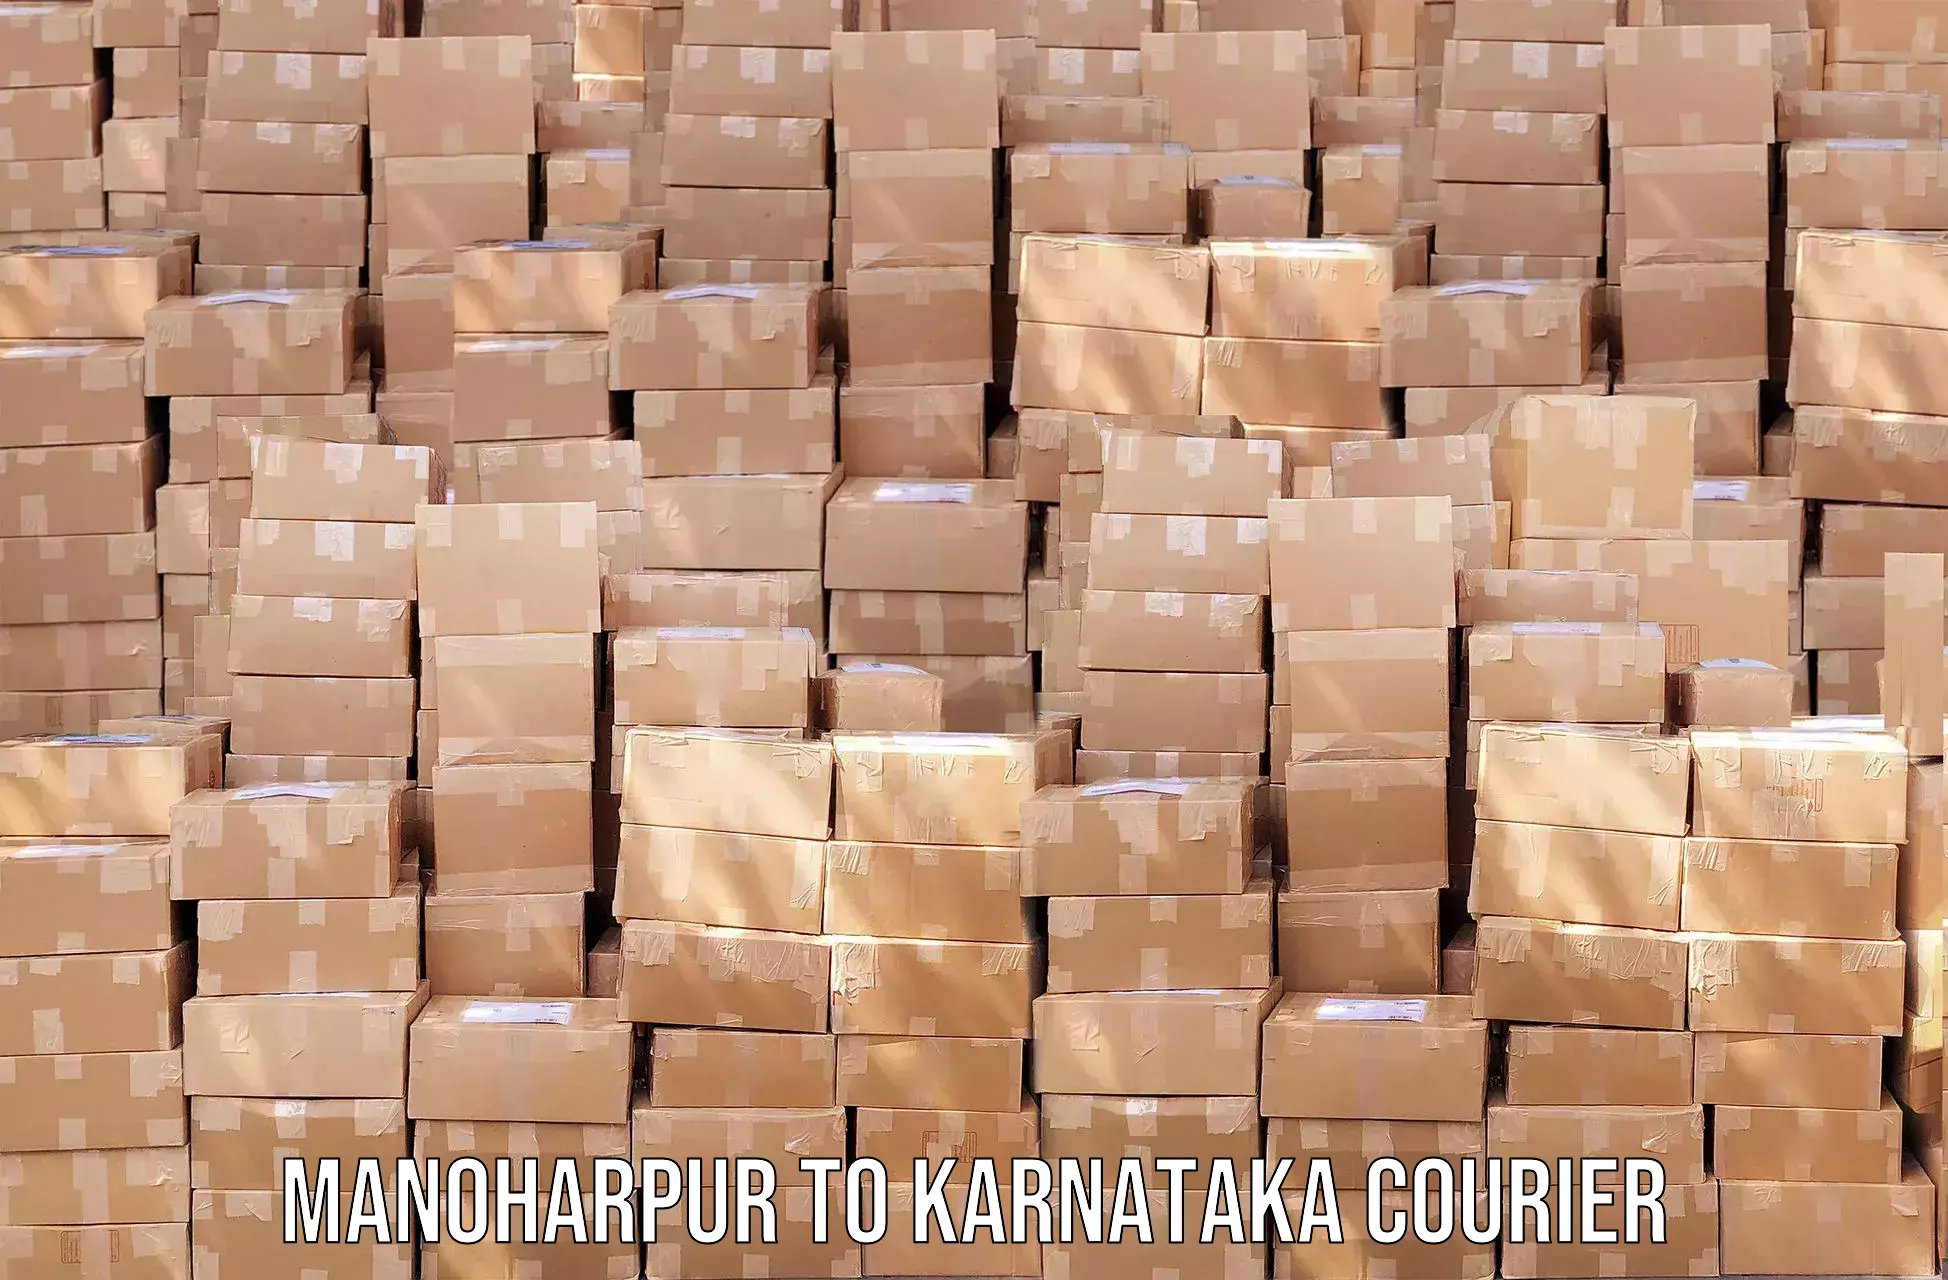 User-friendly delivery service Manoharpur to Banavara